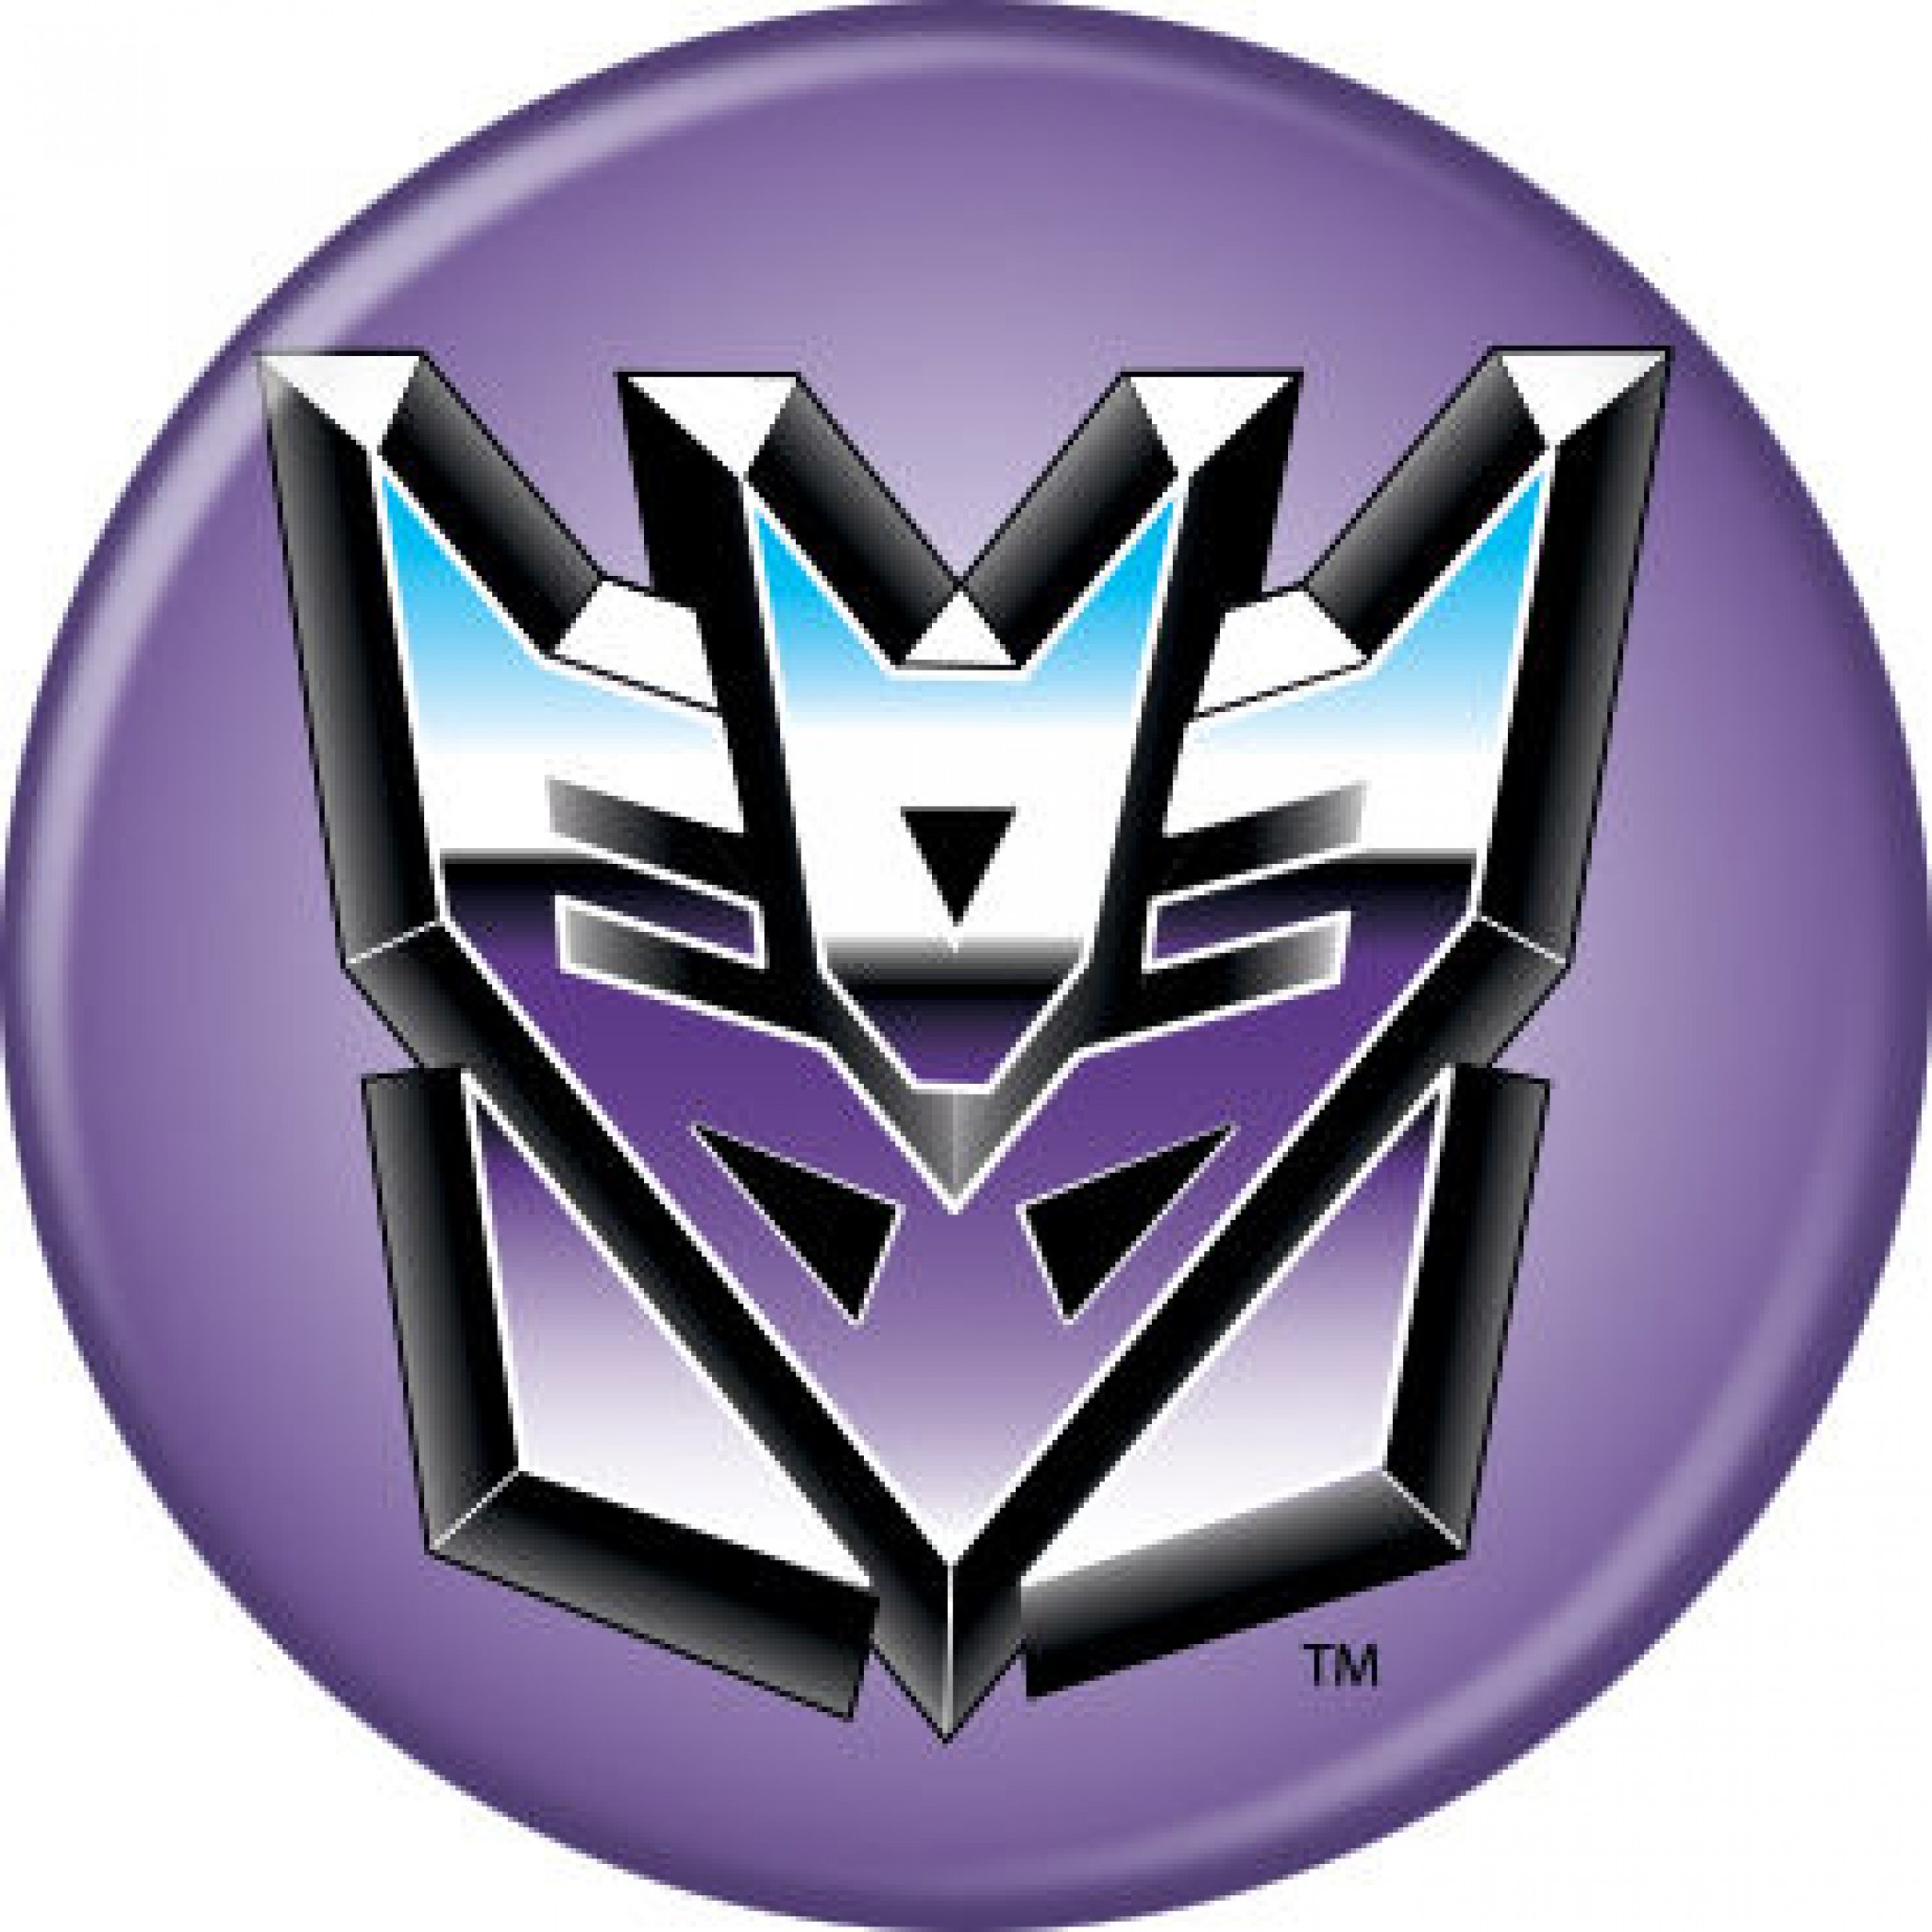 The Transformers Decepticons Logo Button